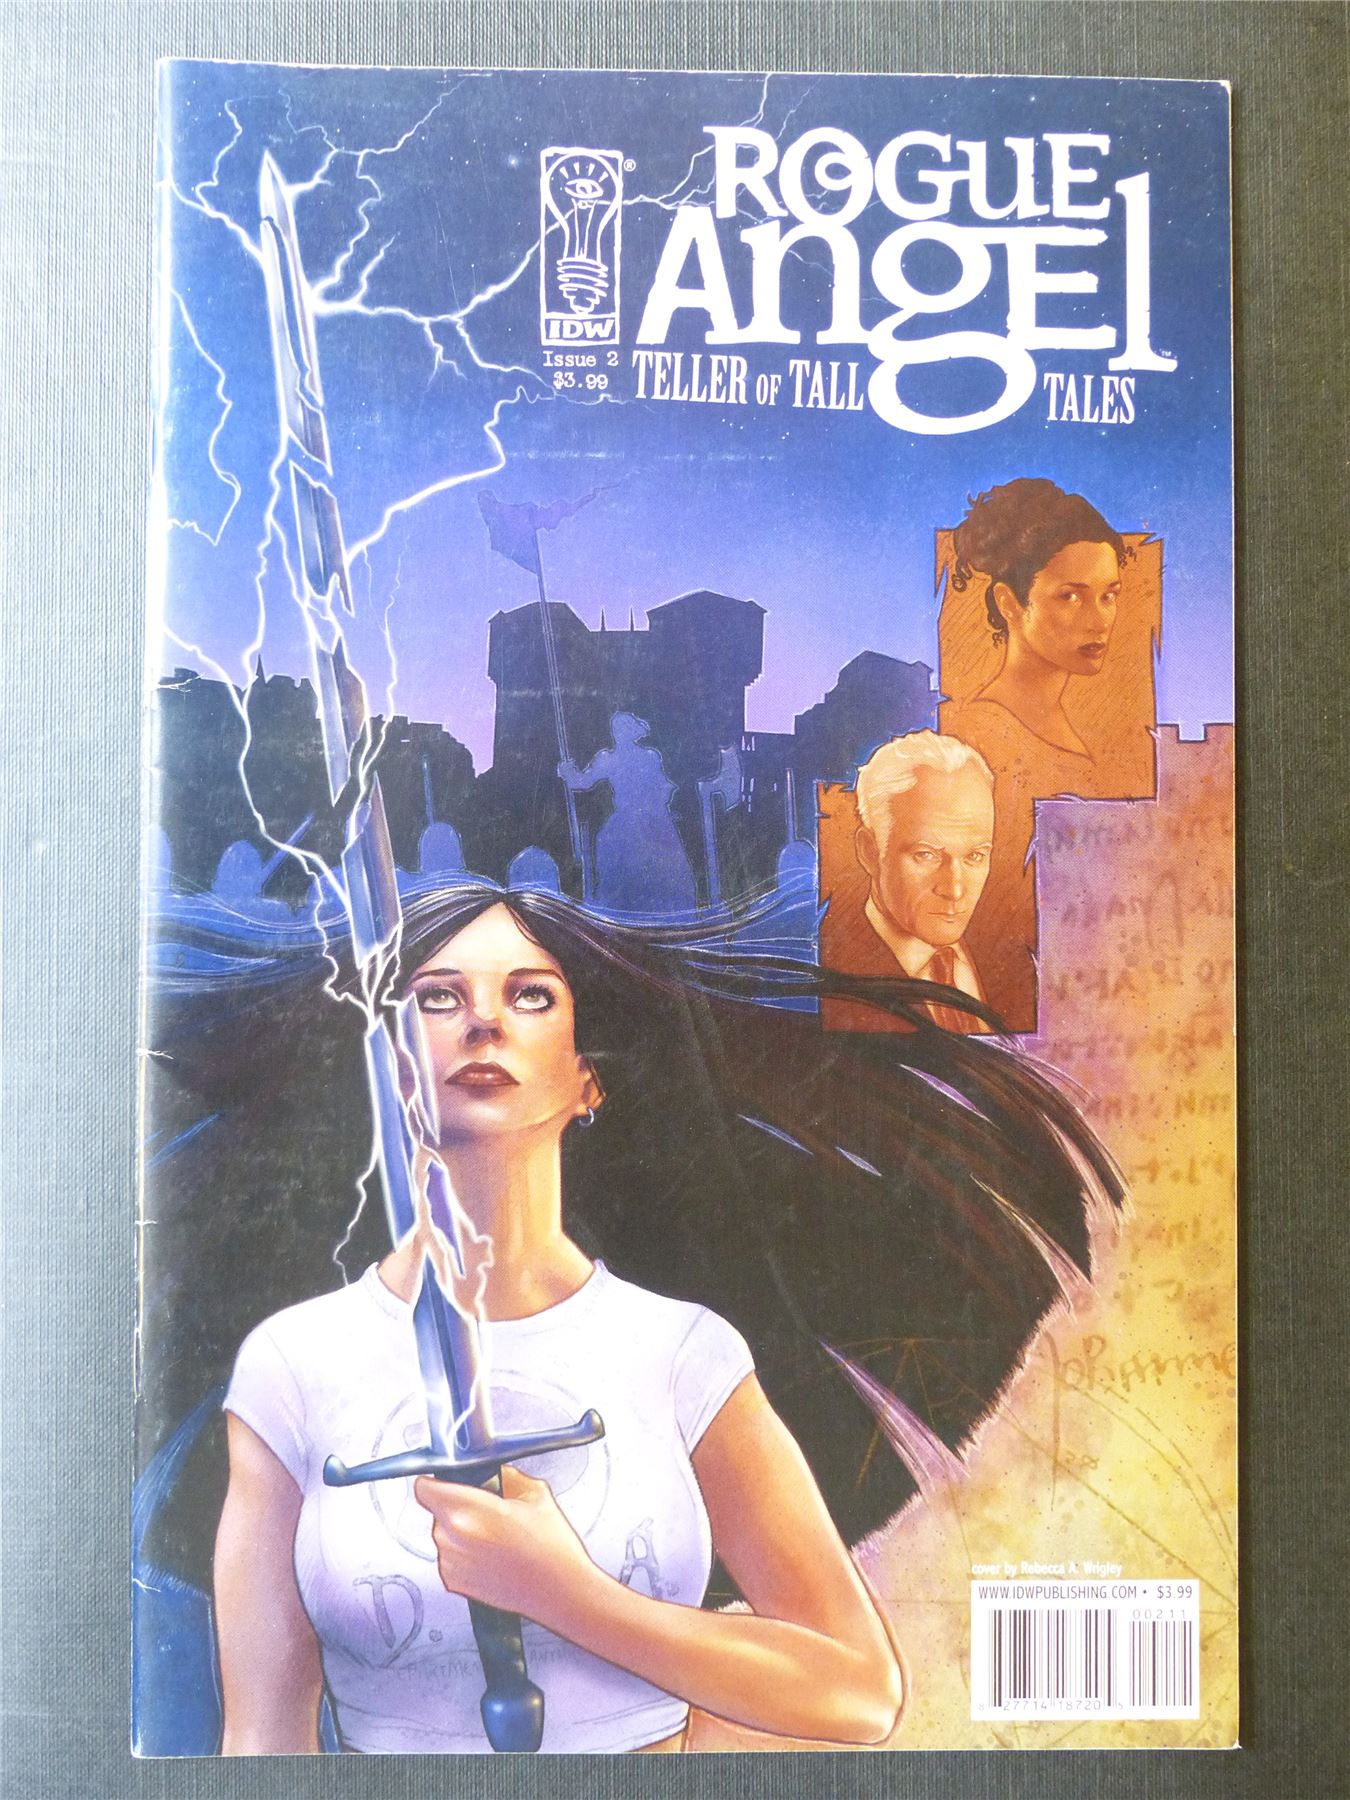 ROGUE Angel: Teller of Tall Tales #2 - IDW Comics #1E4